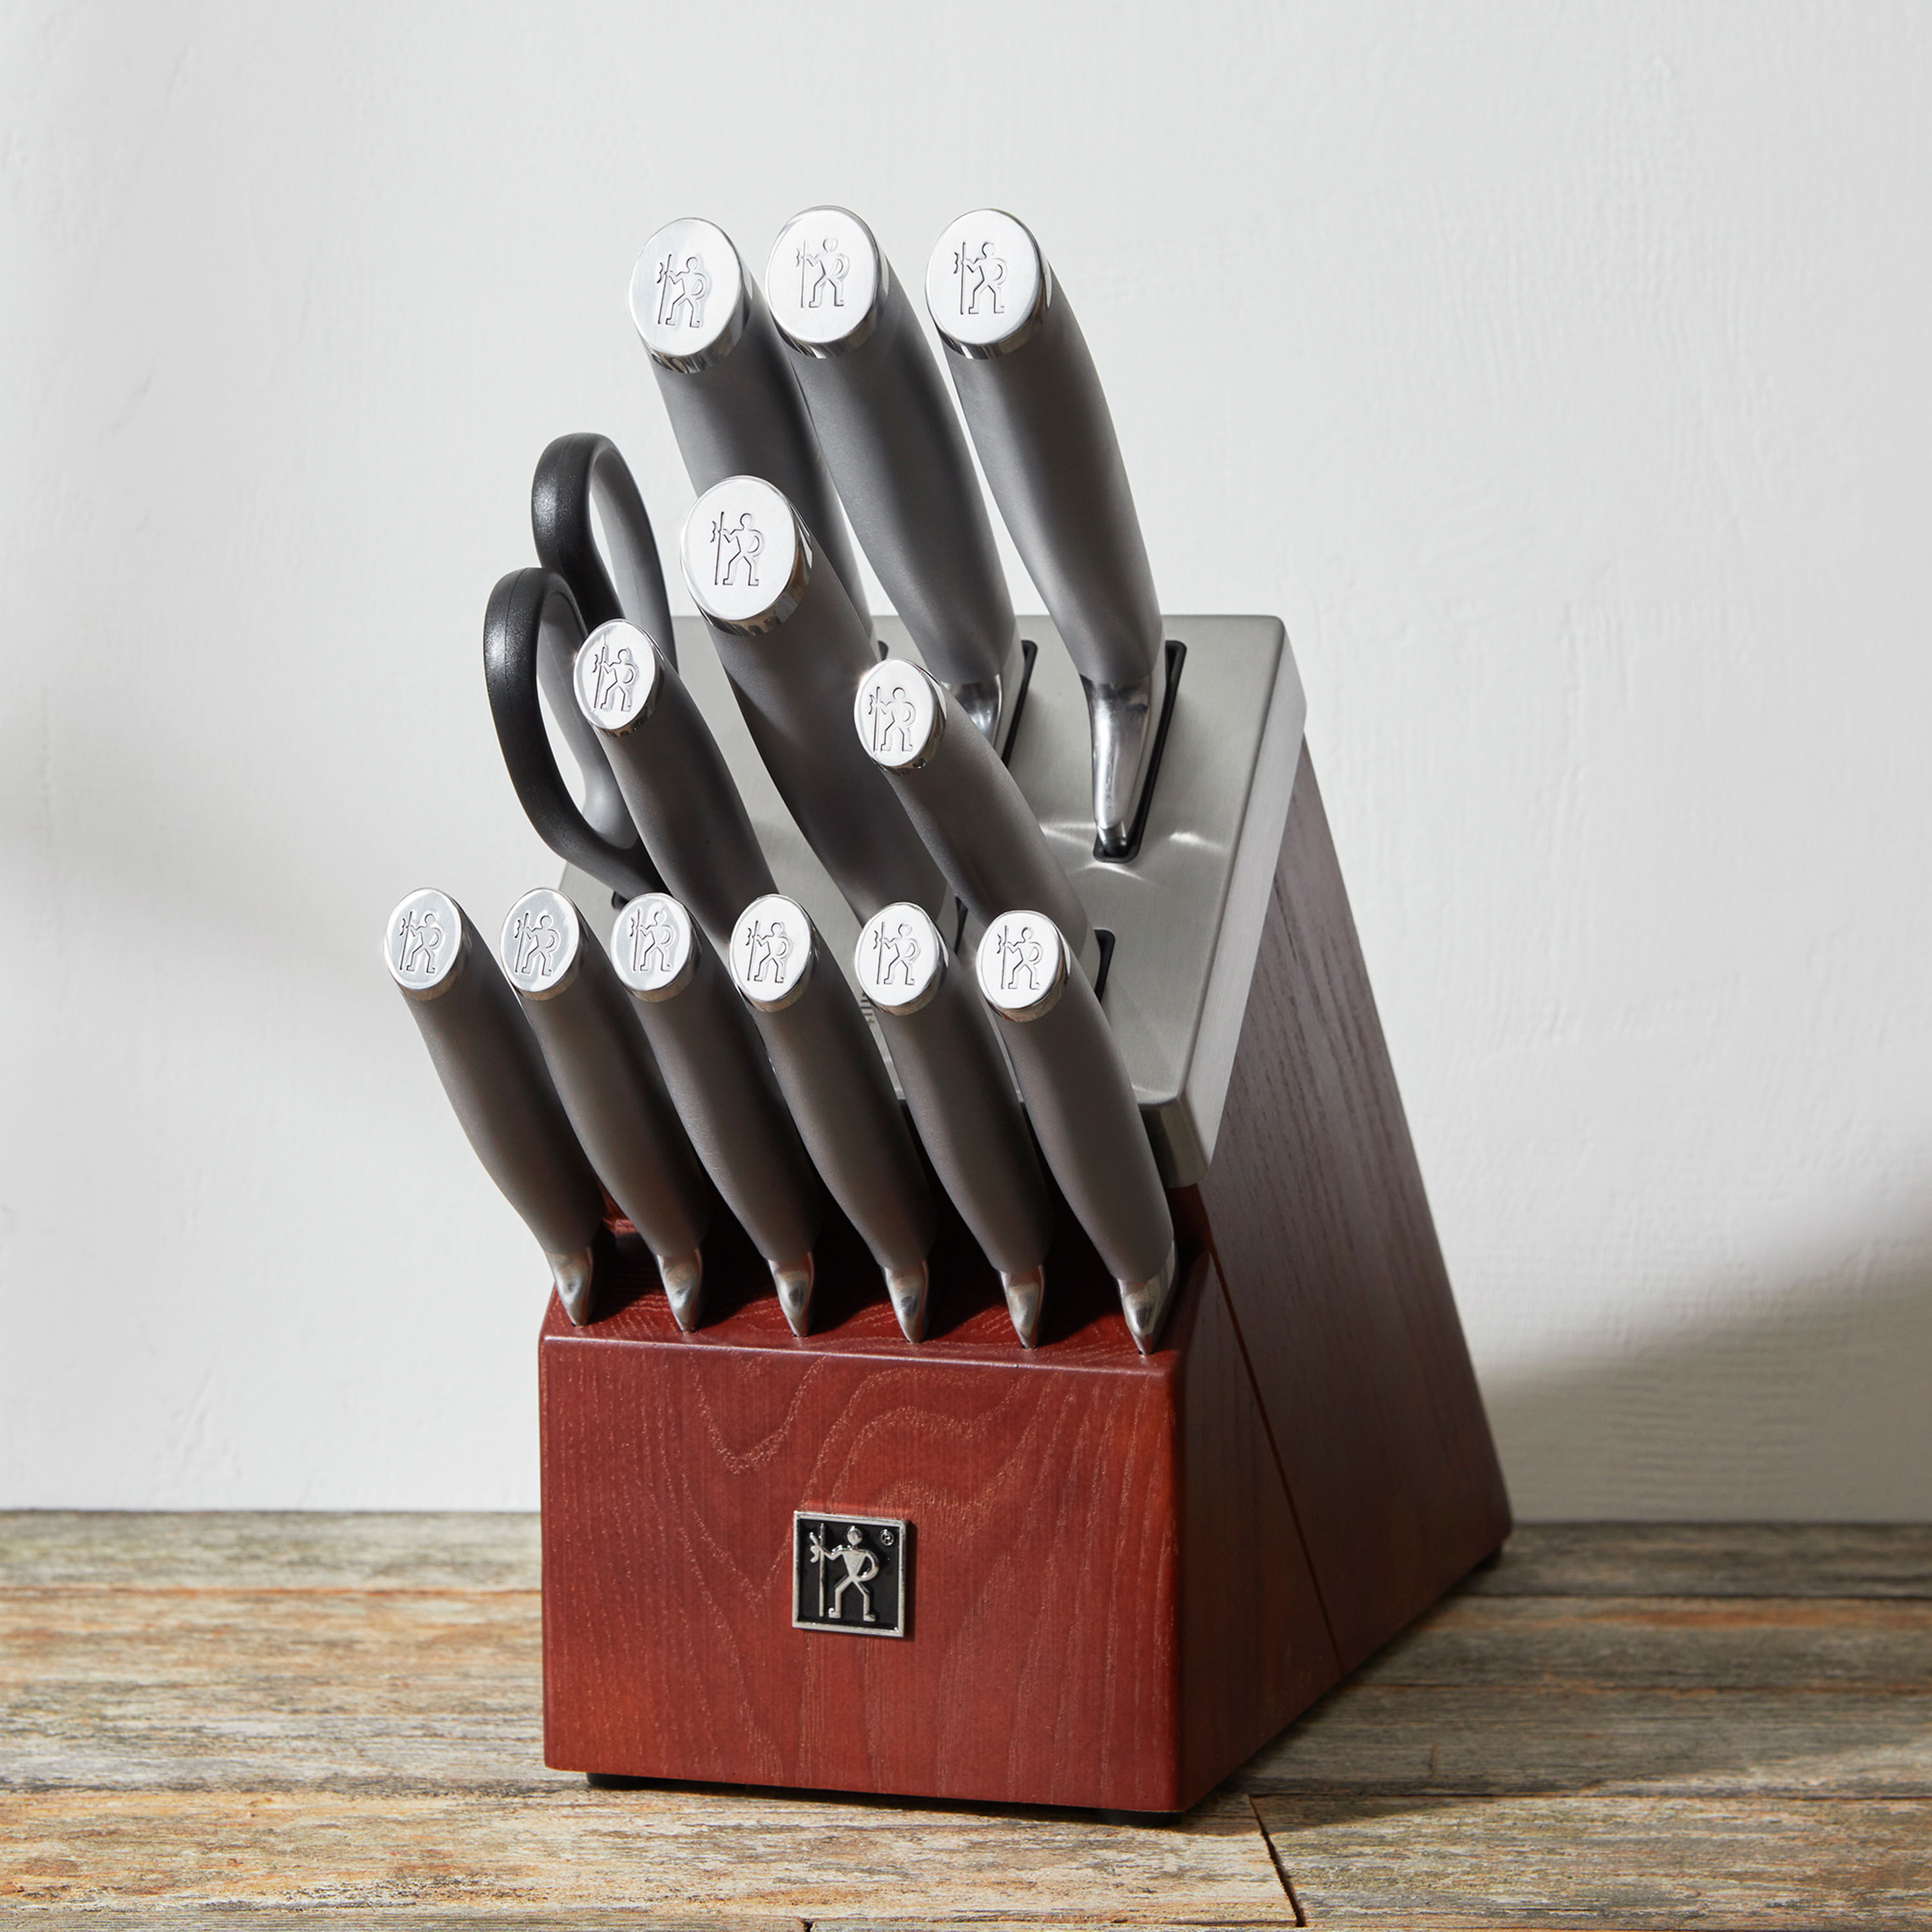 Henckels Modernist 20-Piece Self-Sharpening Knife Block Set